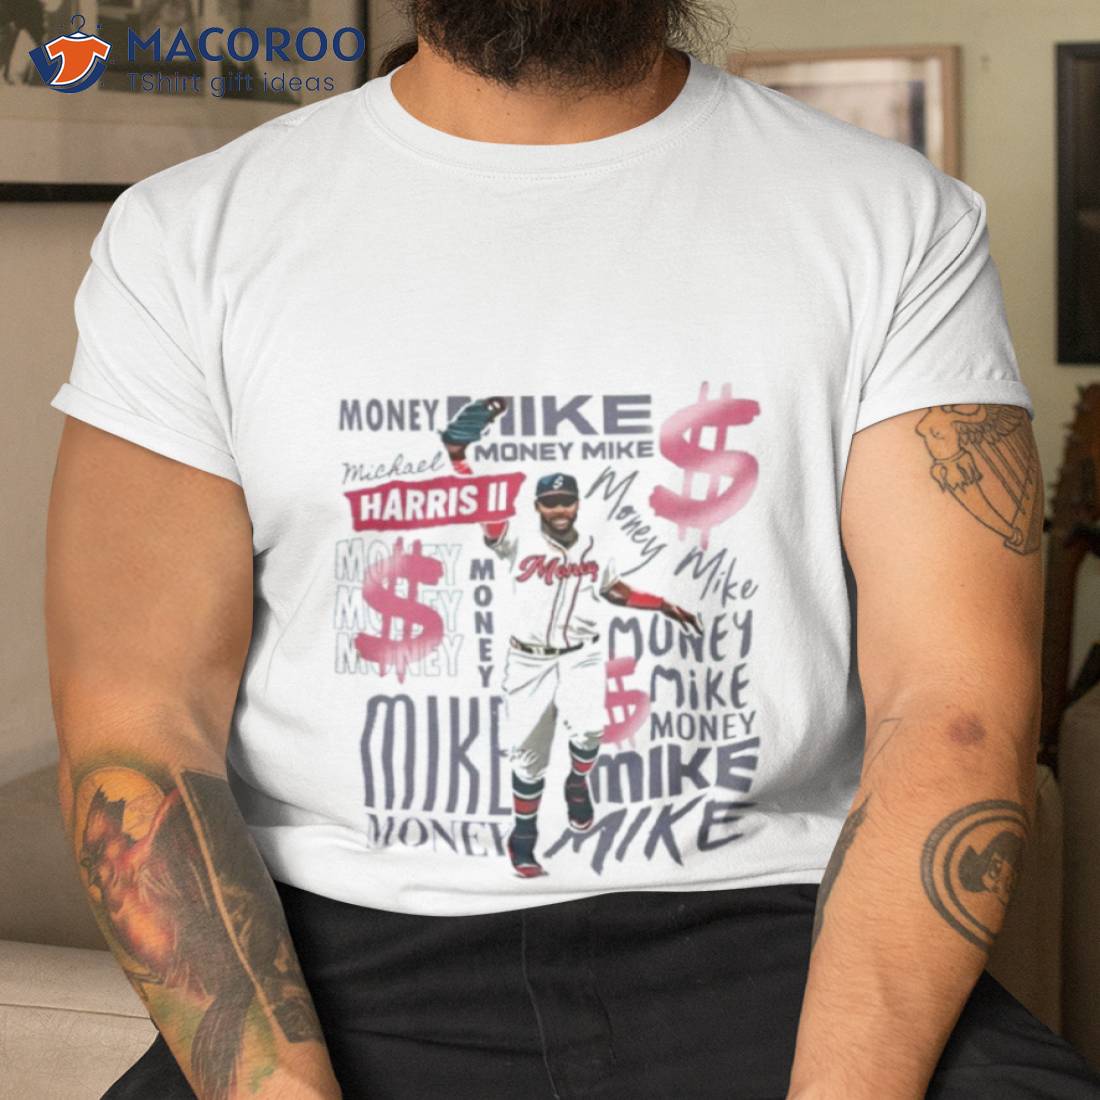 Money Mike $$$ Atlanta Braves Michael Harris Ii Shirt